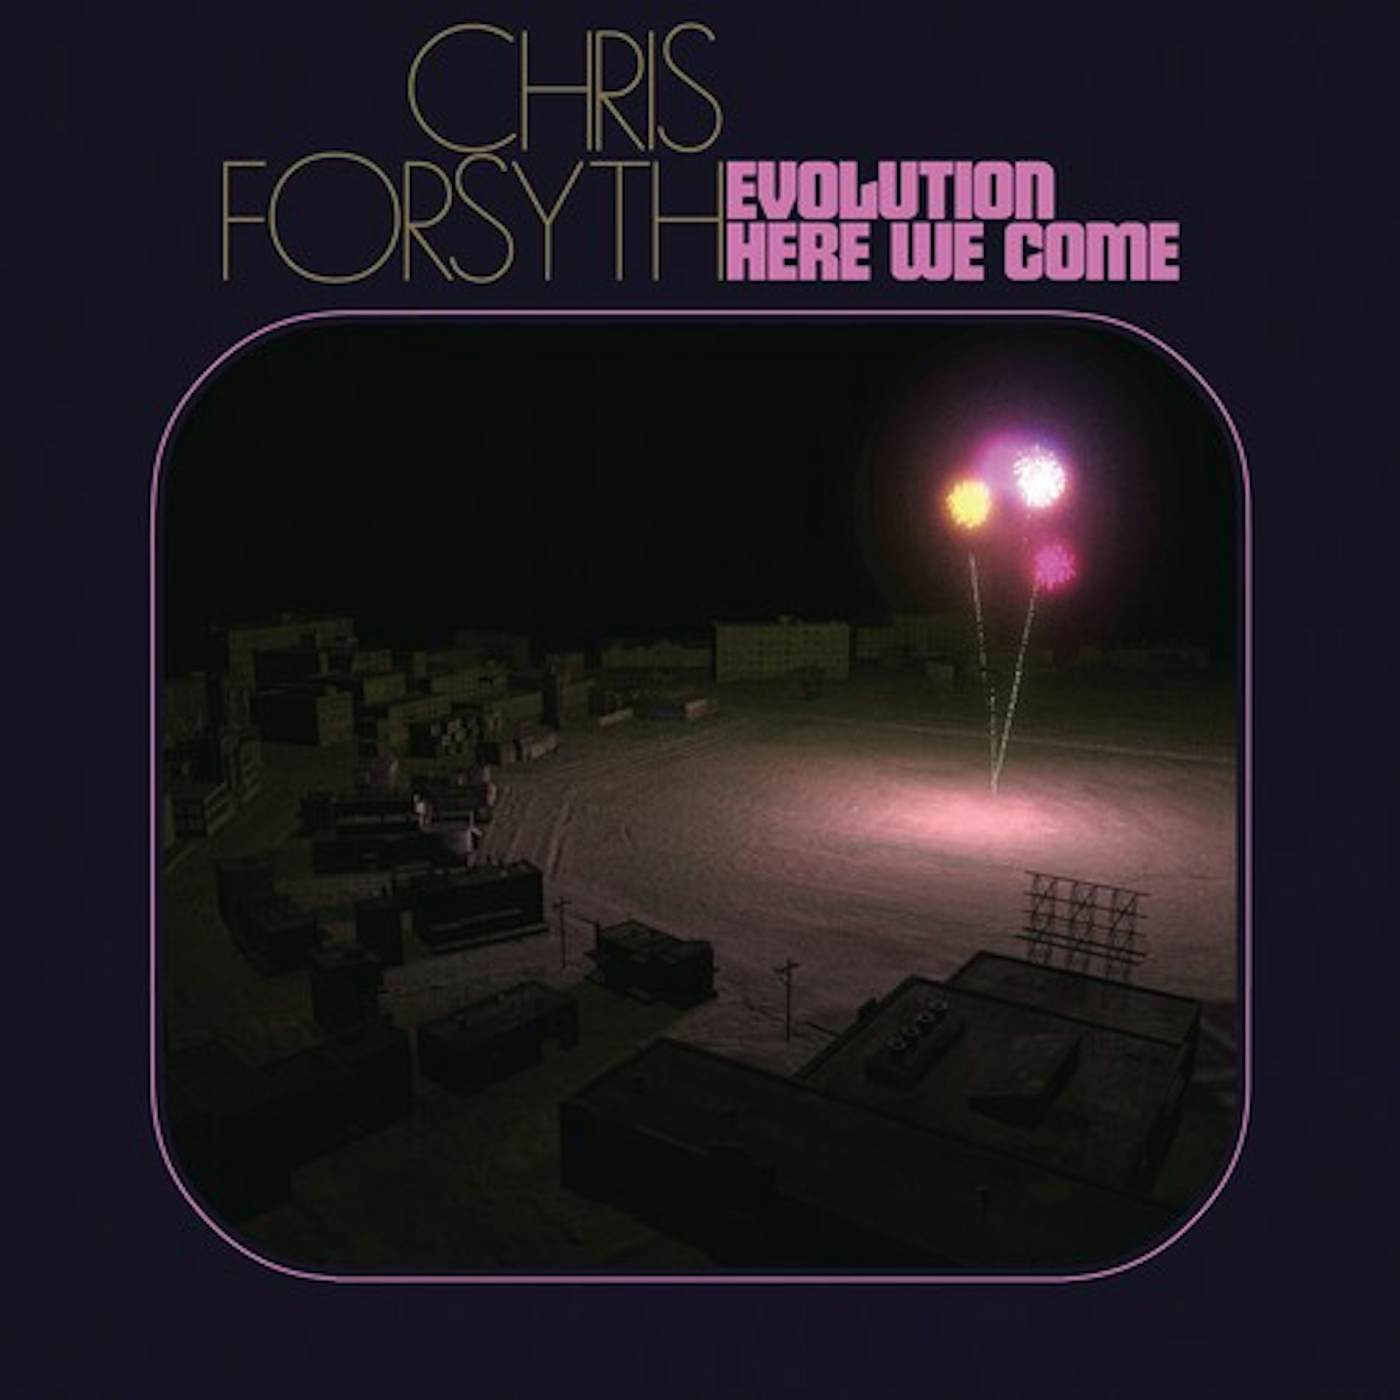 Chris Forsyth Evolution Here We Come Vinyl Record